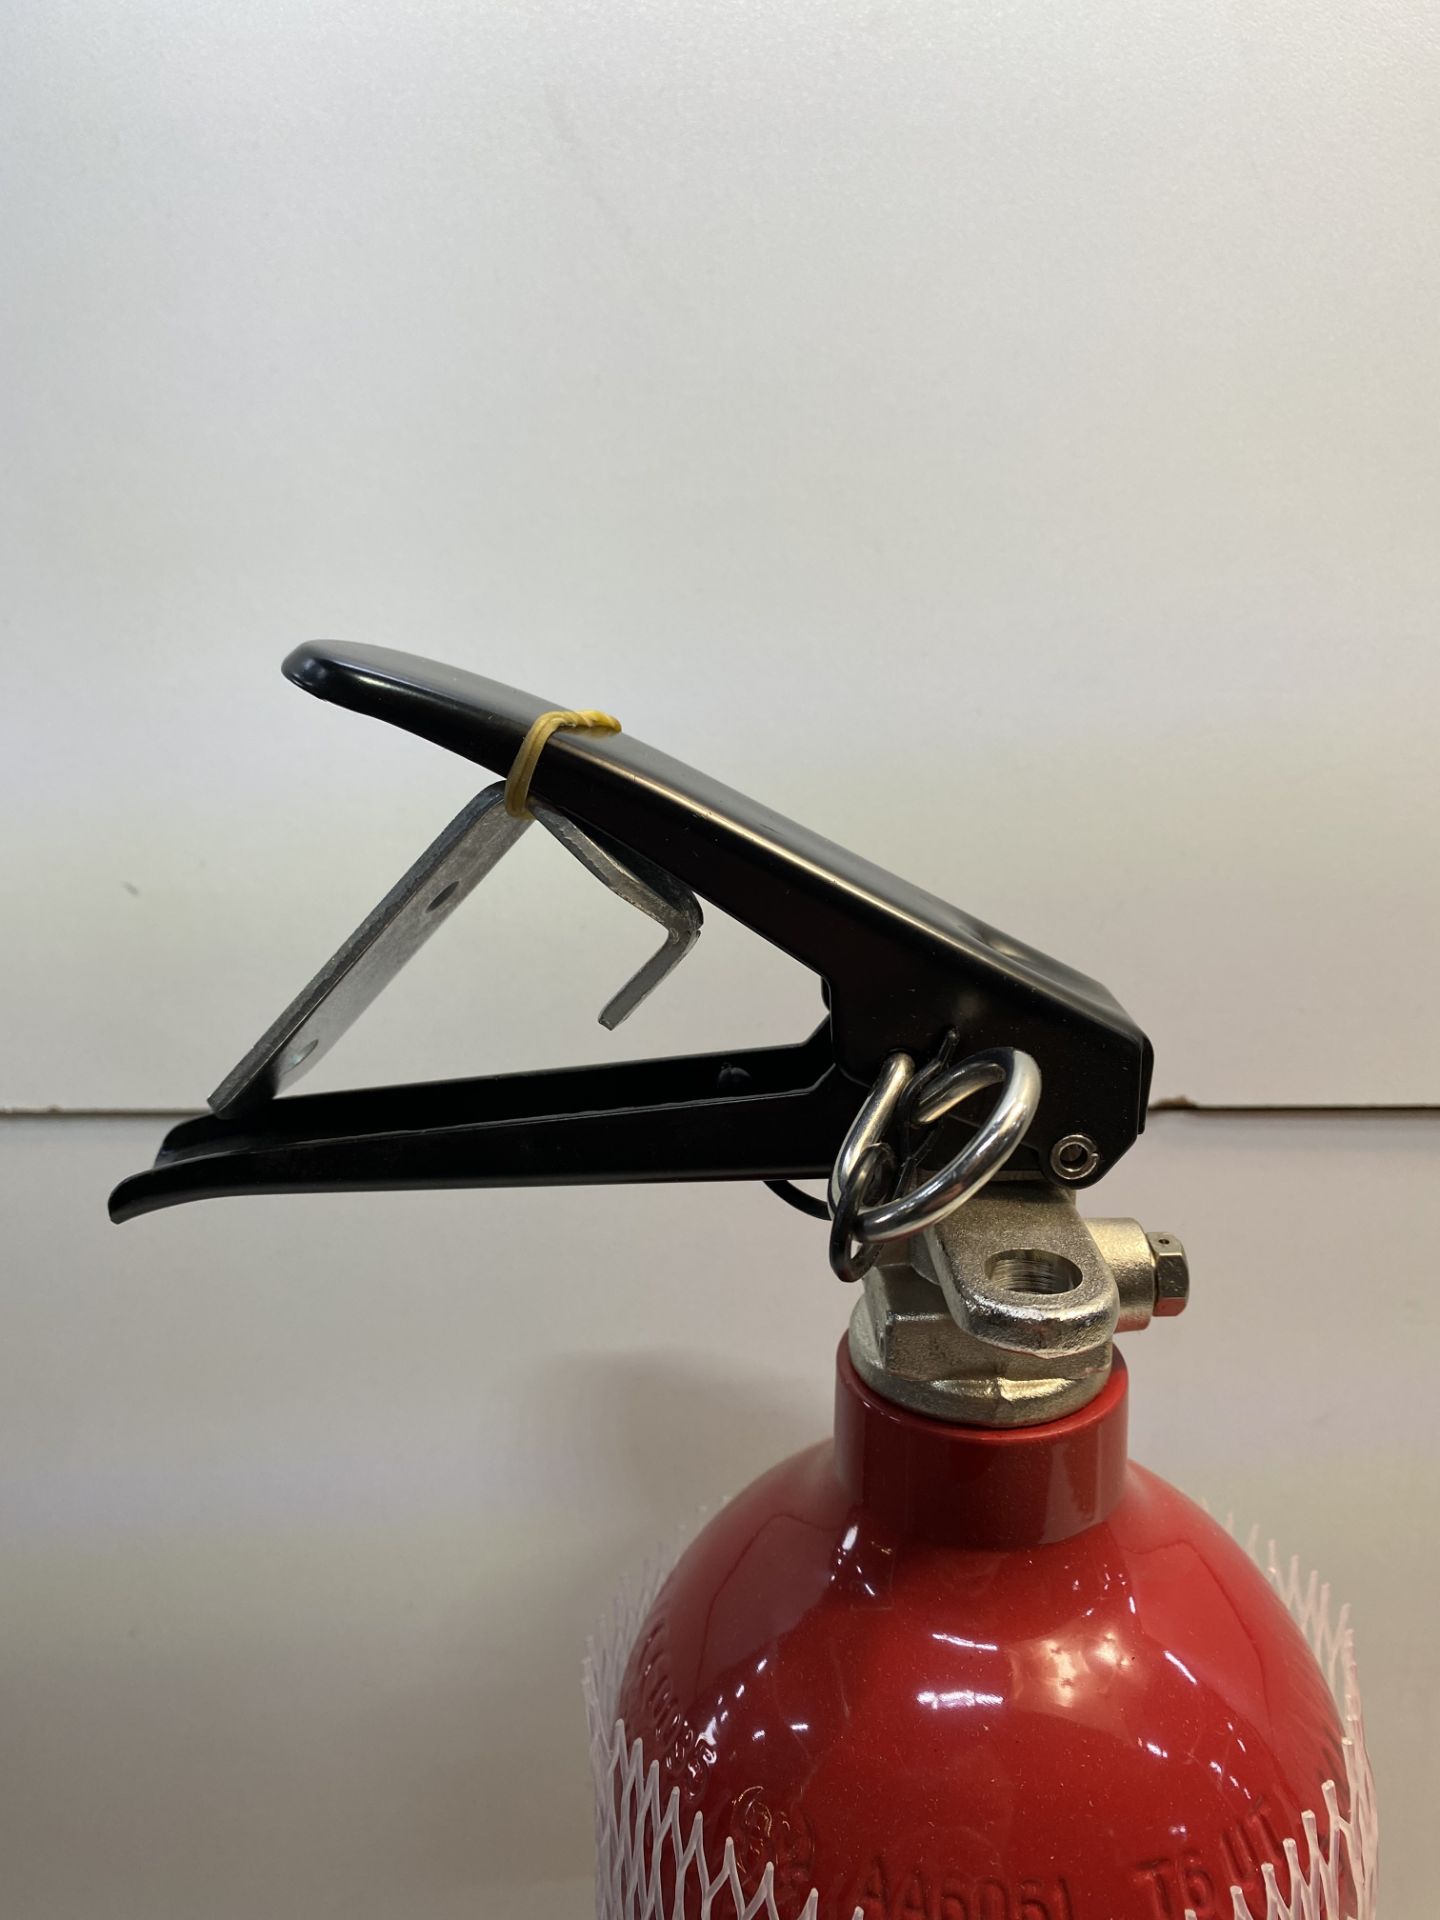 2KG C02 Fire Extinguisher Kit - Image 6 of 6